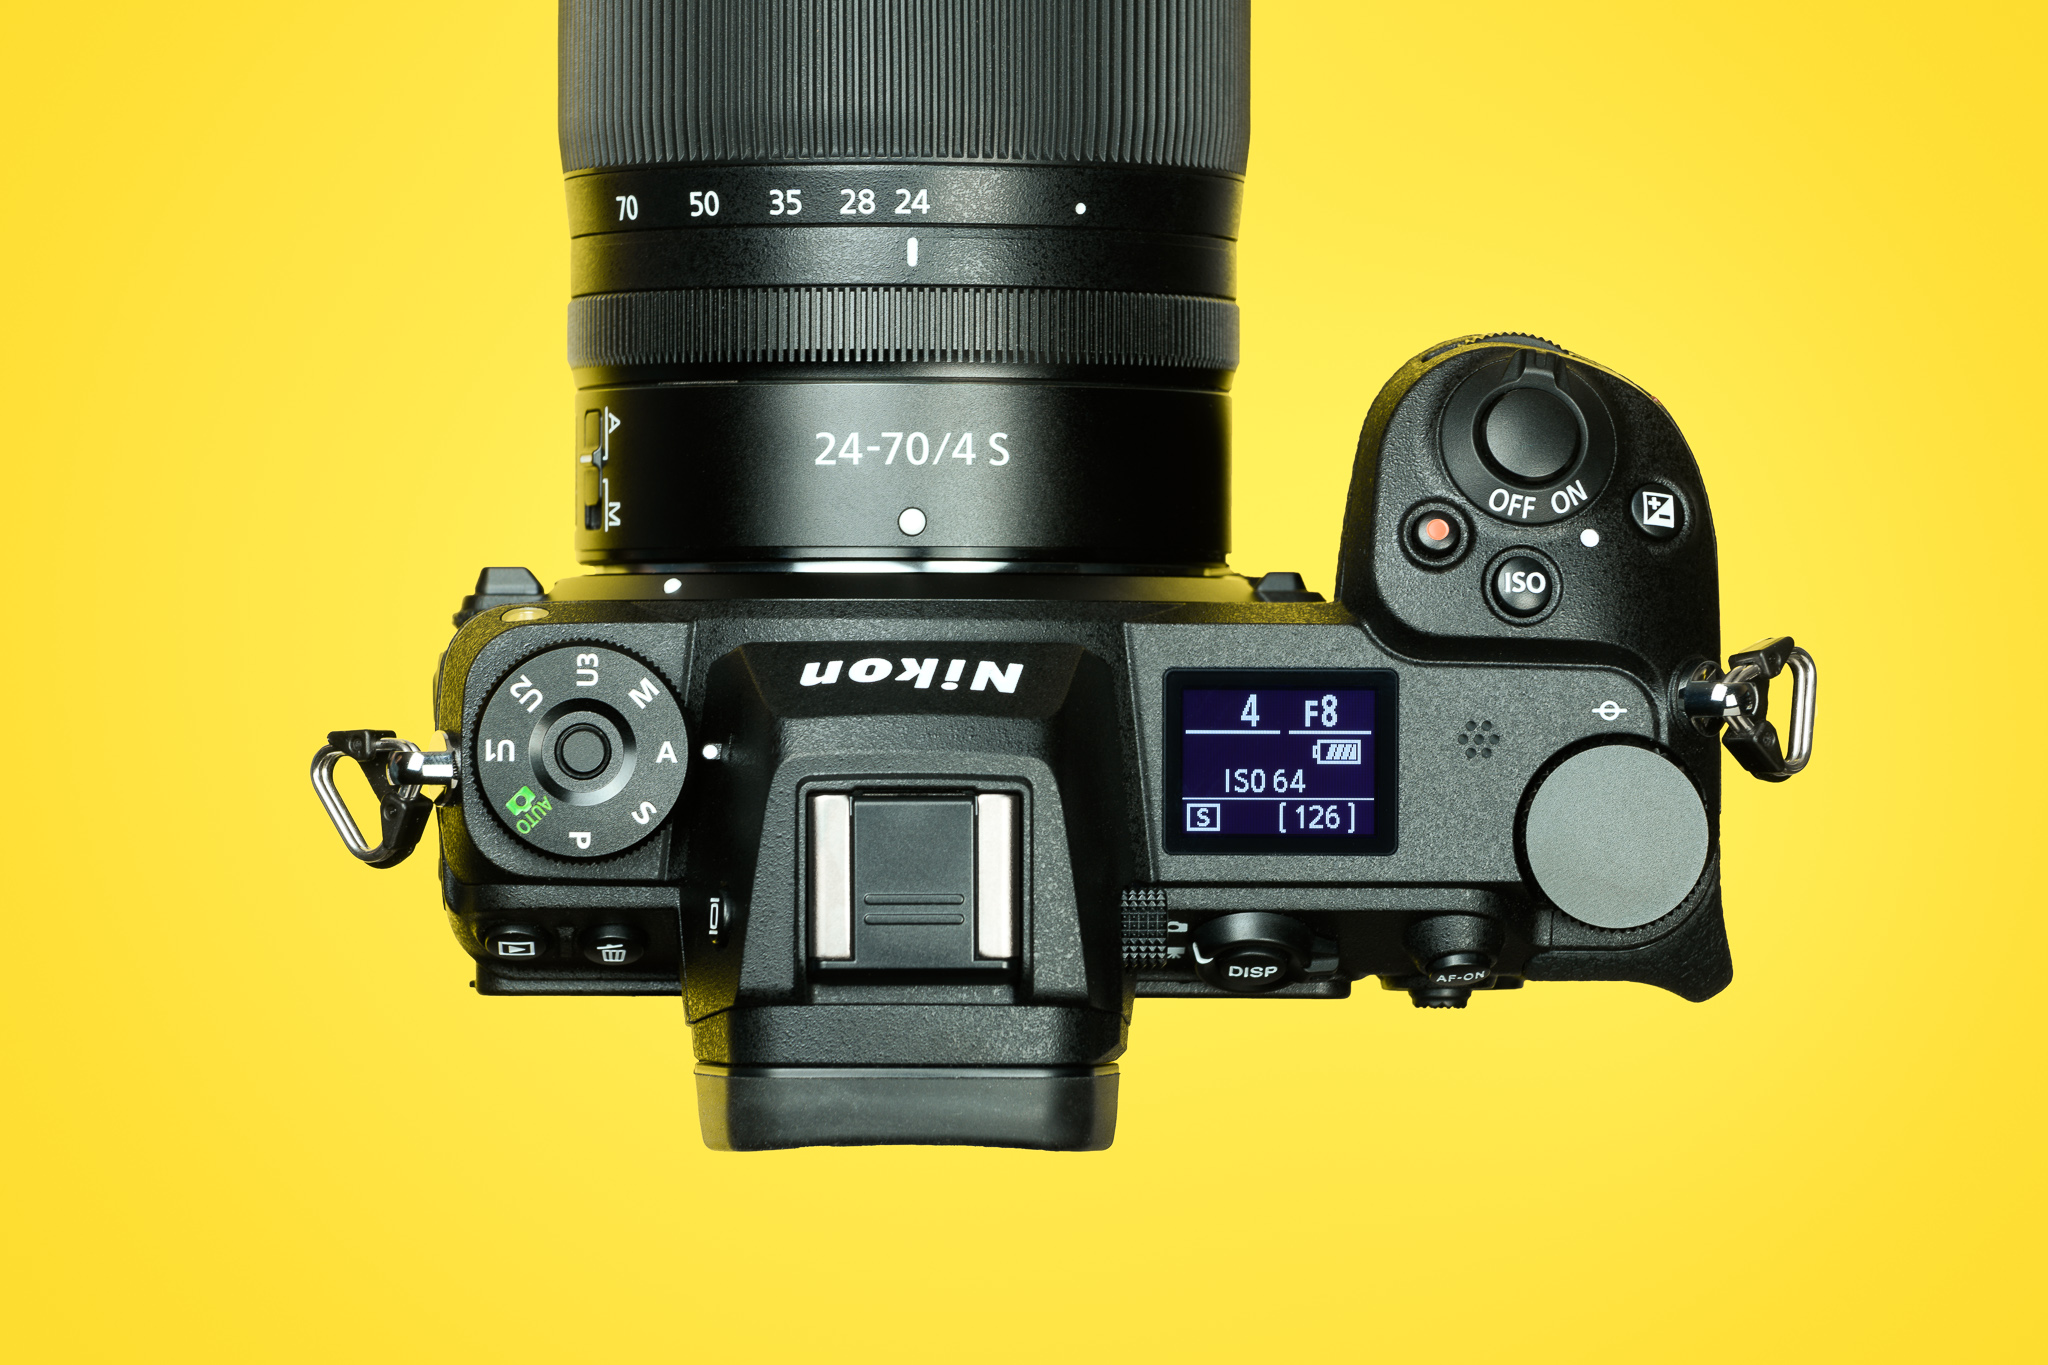 Nikon Z 6II | Versatile full-frame mirrorless stills/video hybrid camera |  Nikon USA Model